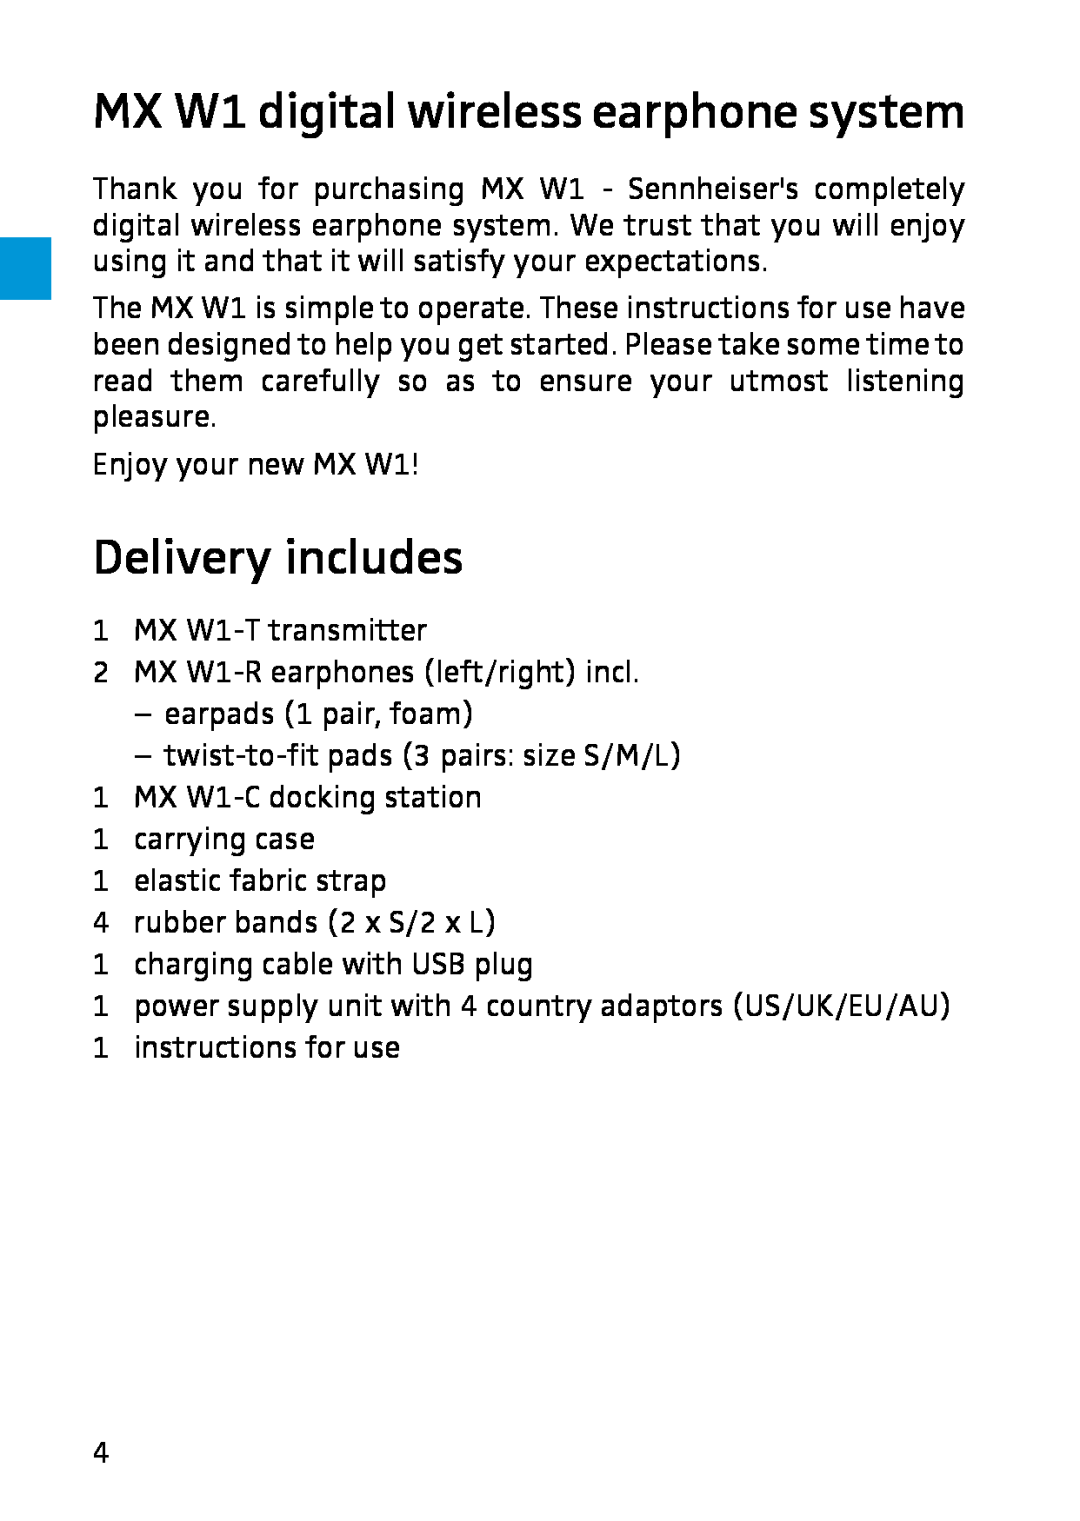 Sennheiser instruction manual MX W1 digital wireless earphone system, Delivery includes 